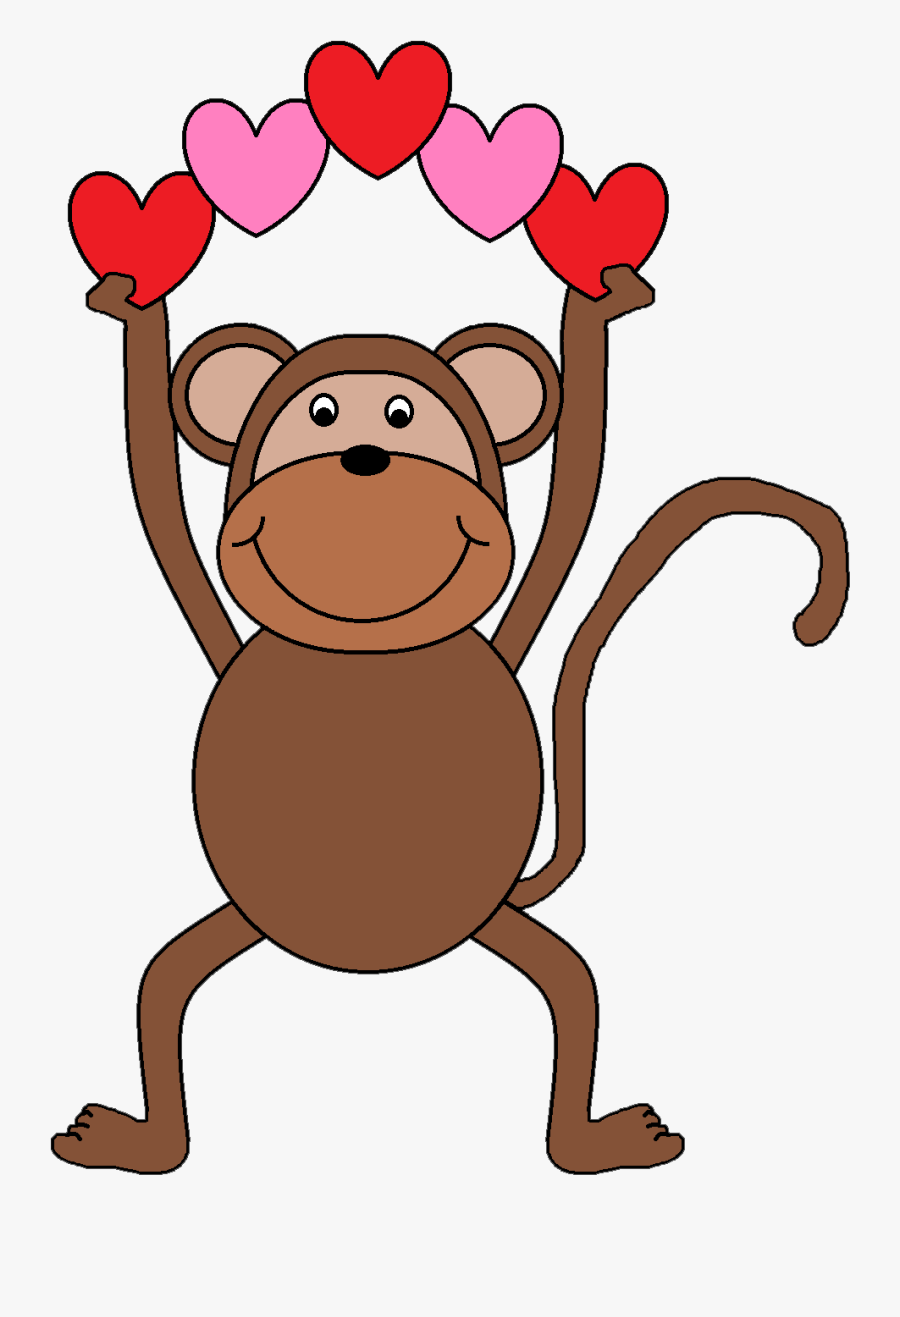 Valentine"s Day Clipart Monkey - Monkey Clipart Black And White, Transparent Clipart